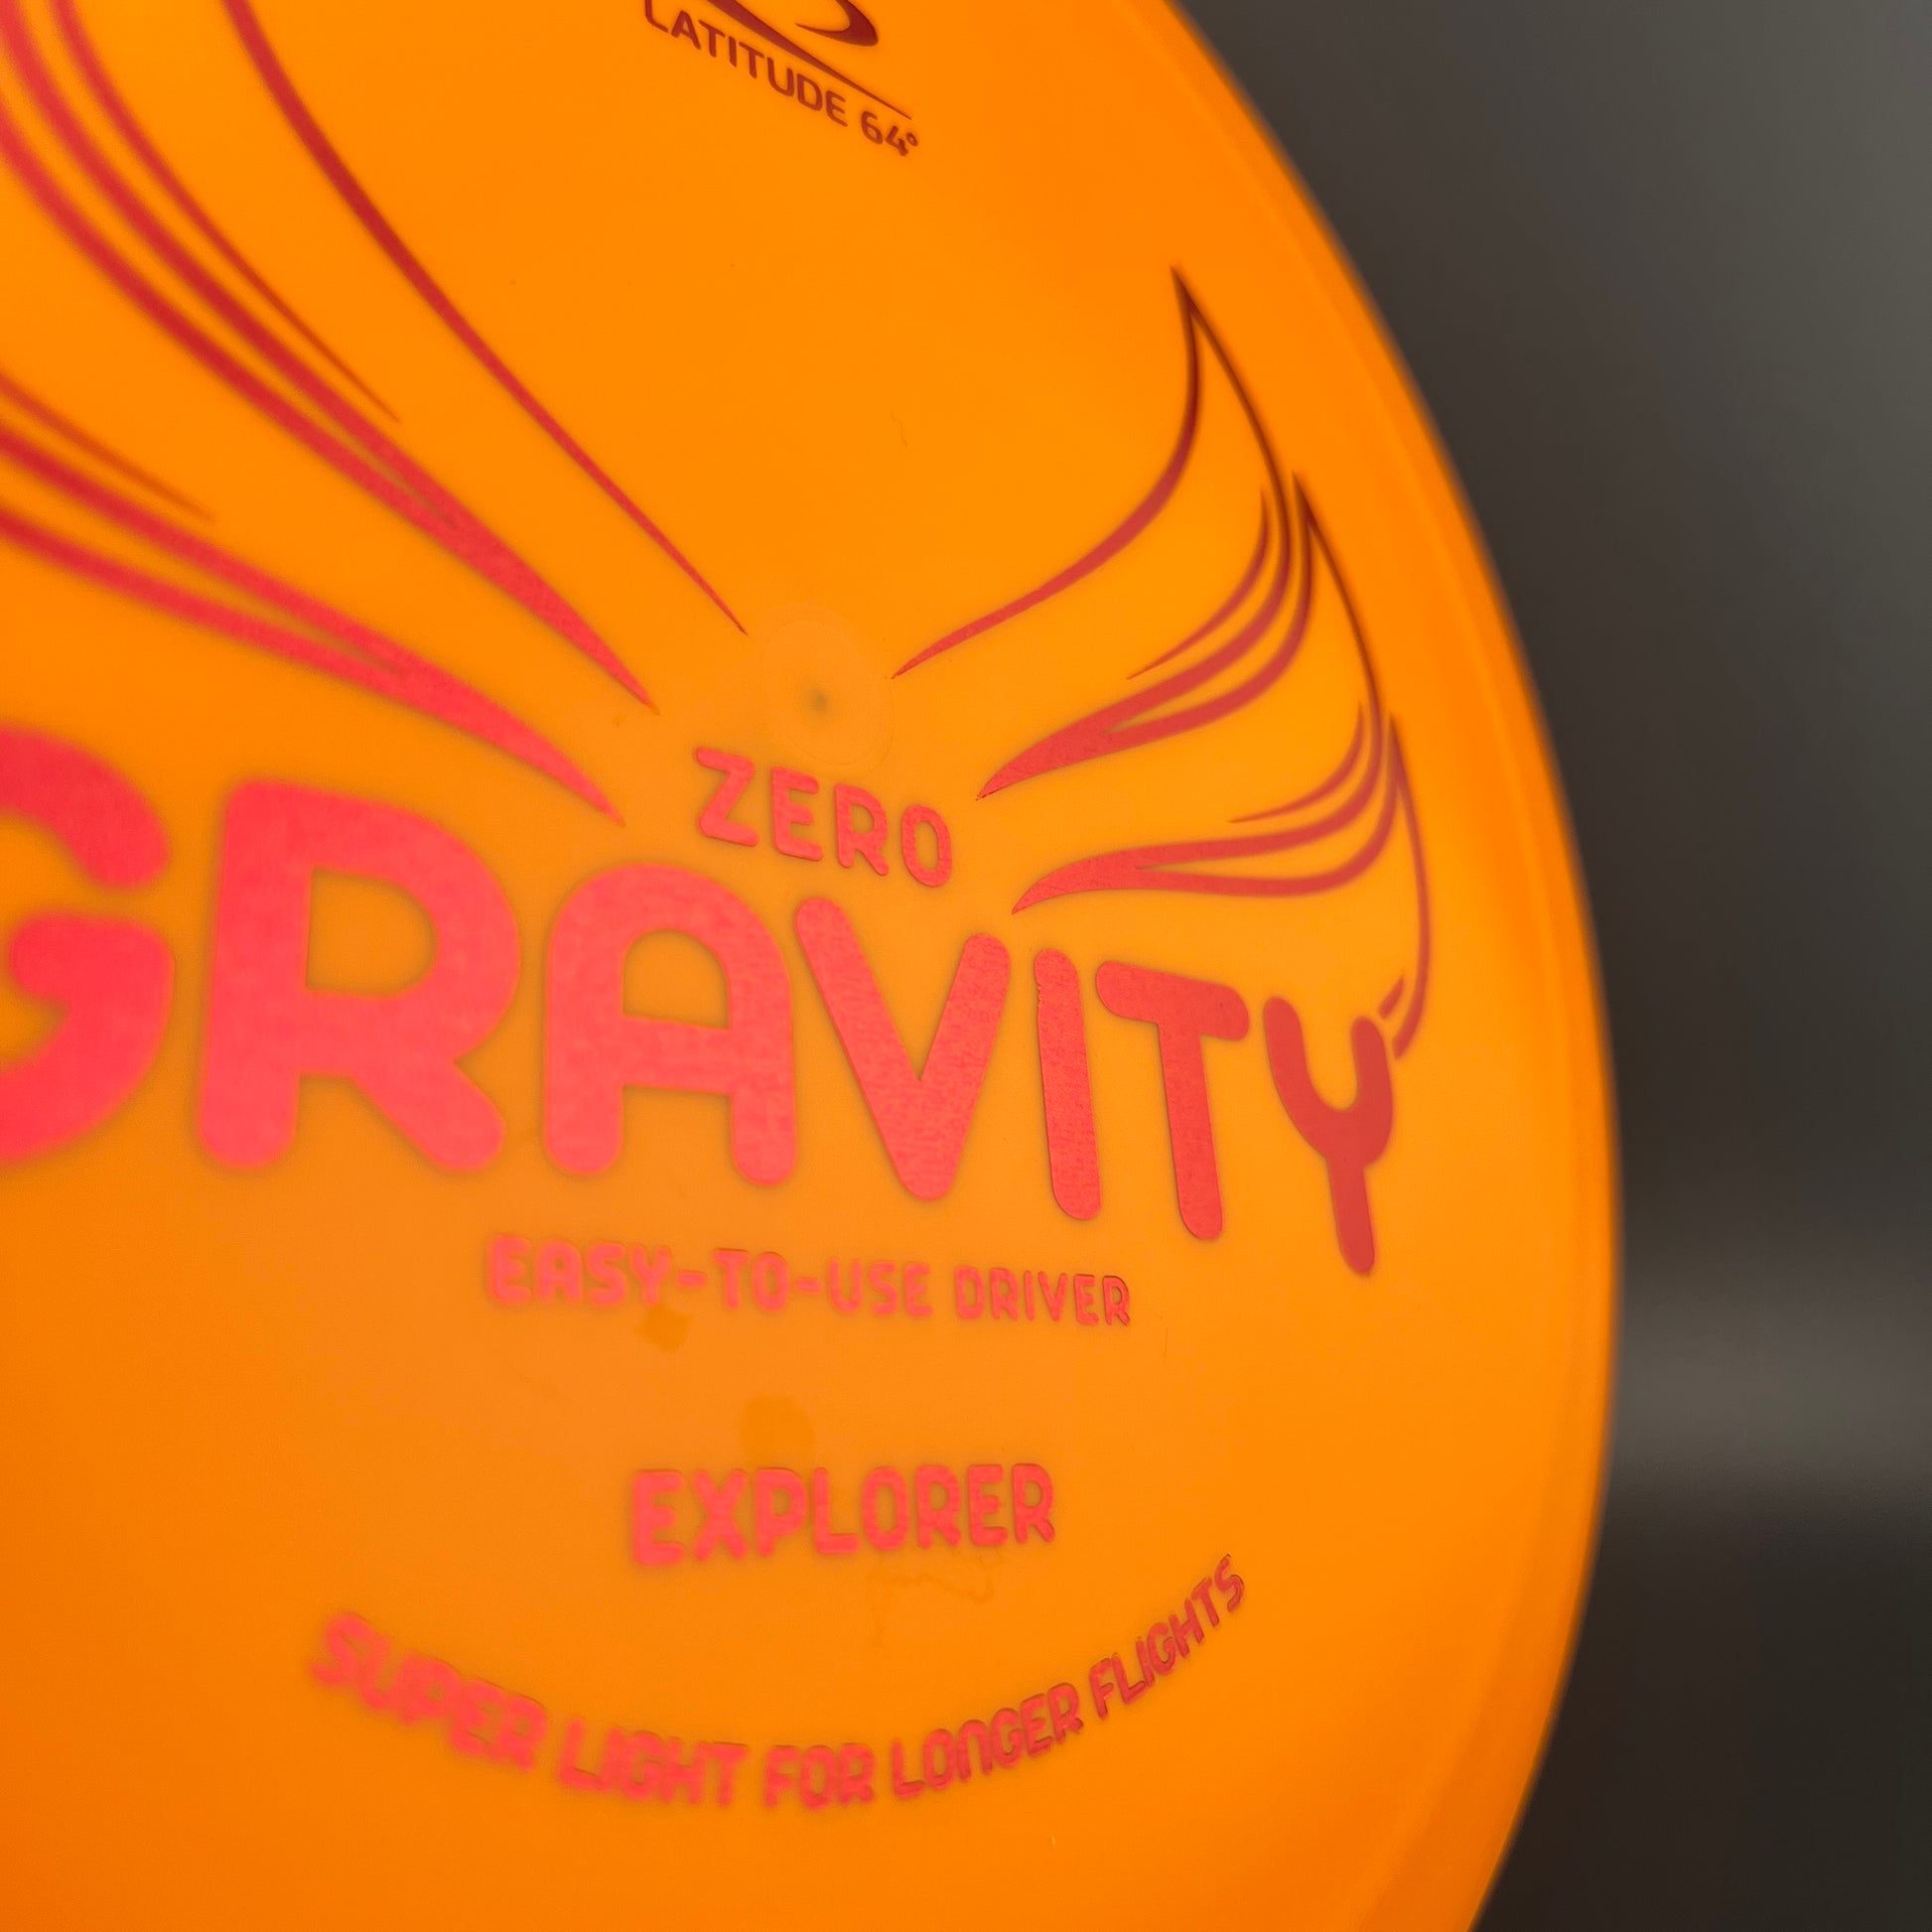 Zero Gravity Explorer - First Run Latitude 64